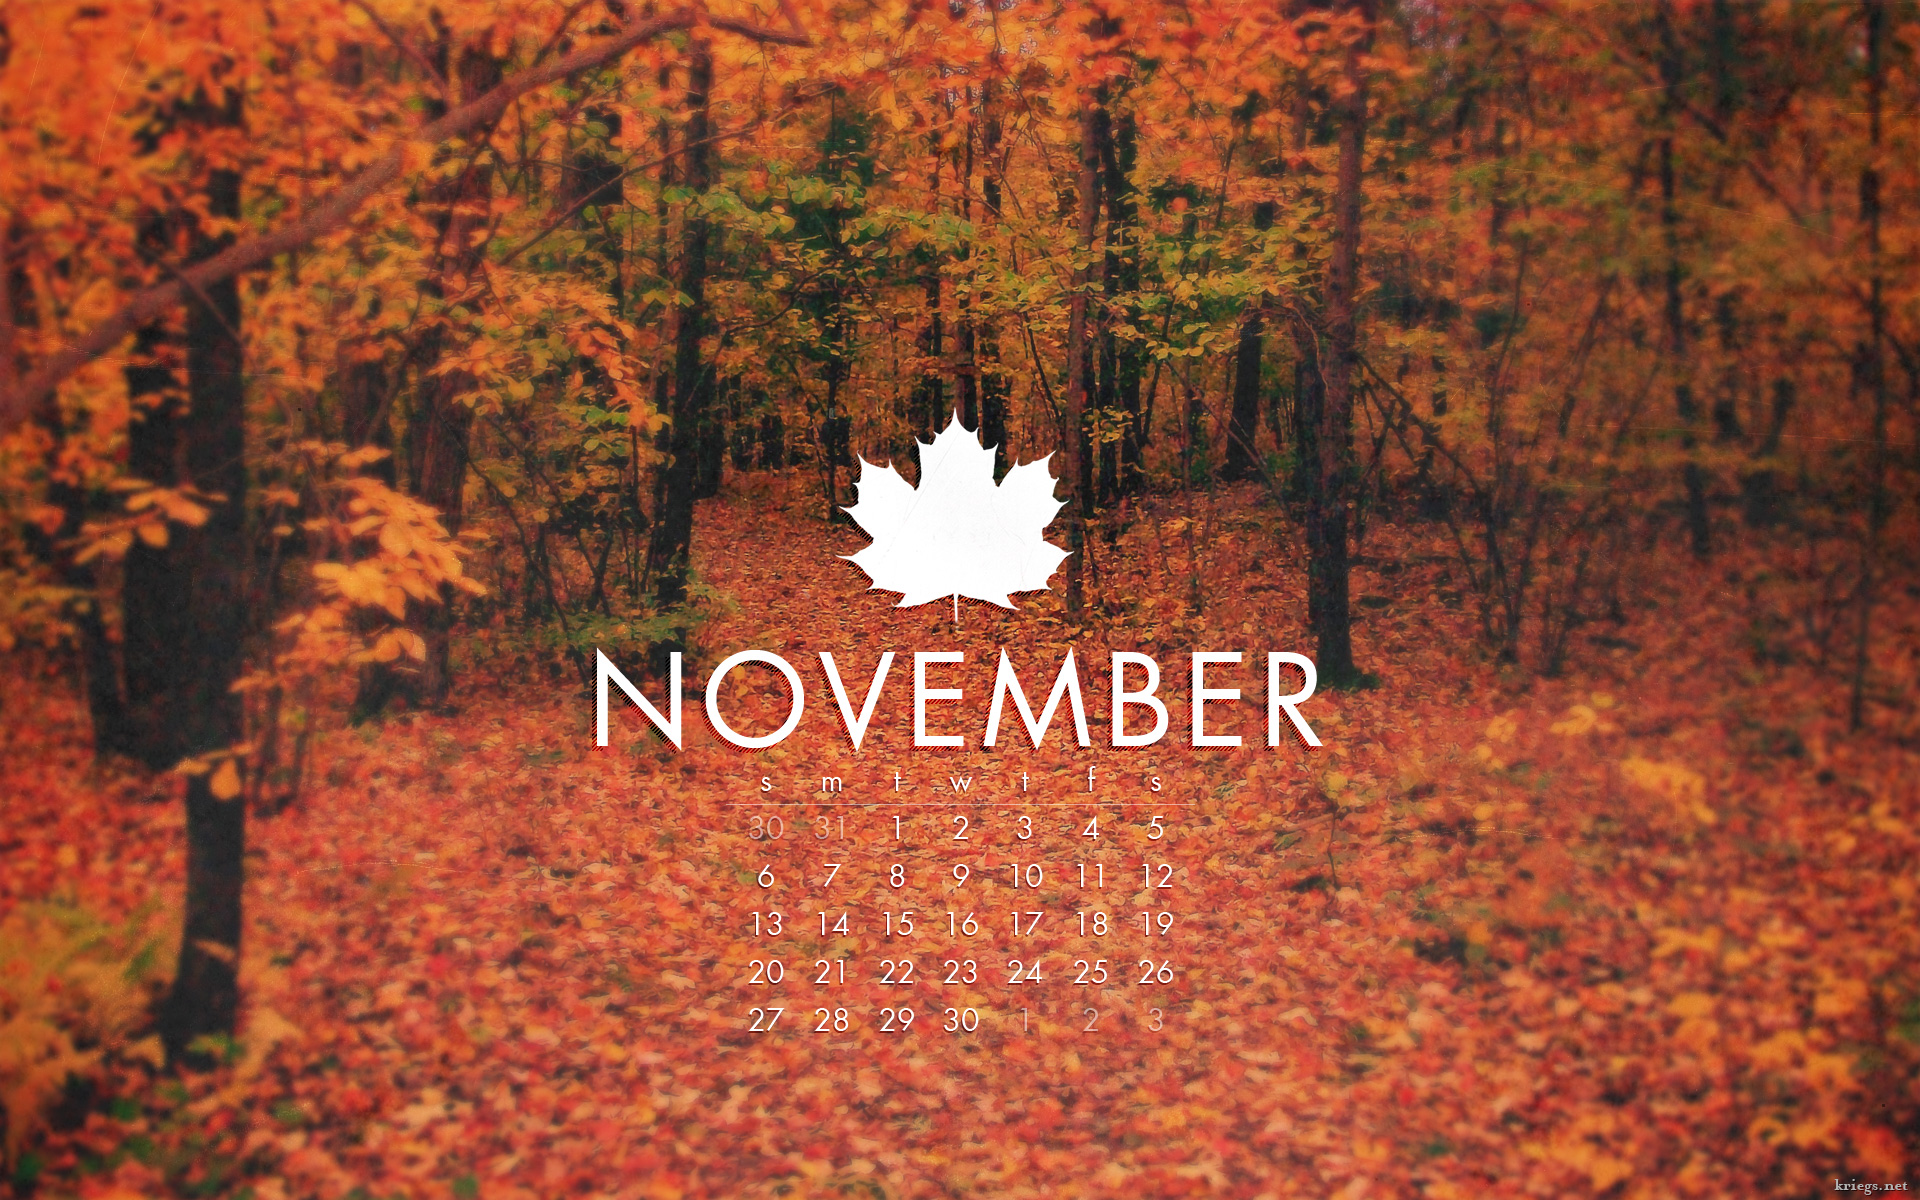 [45+] November Wallpaper Pictures